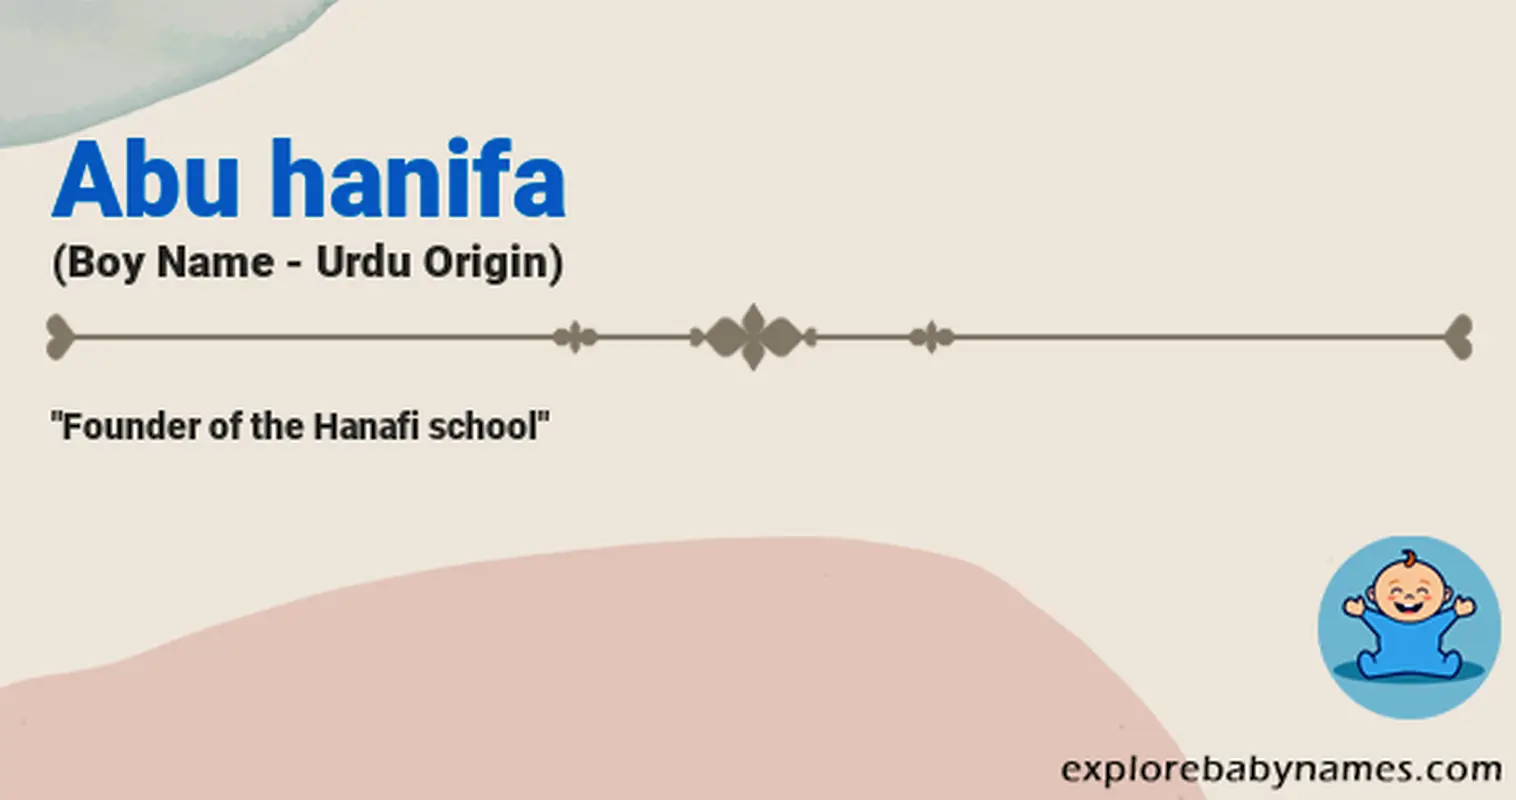 Meaning of Abu hanifa